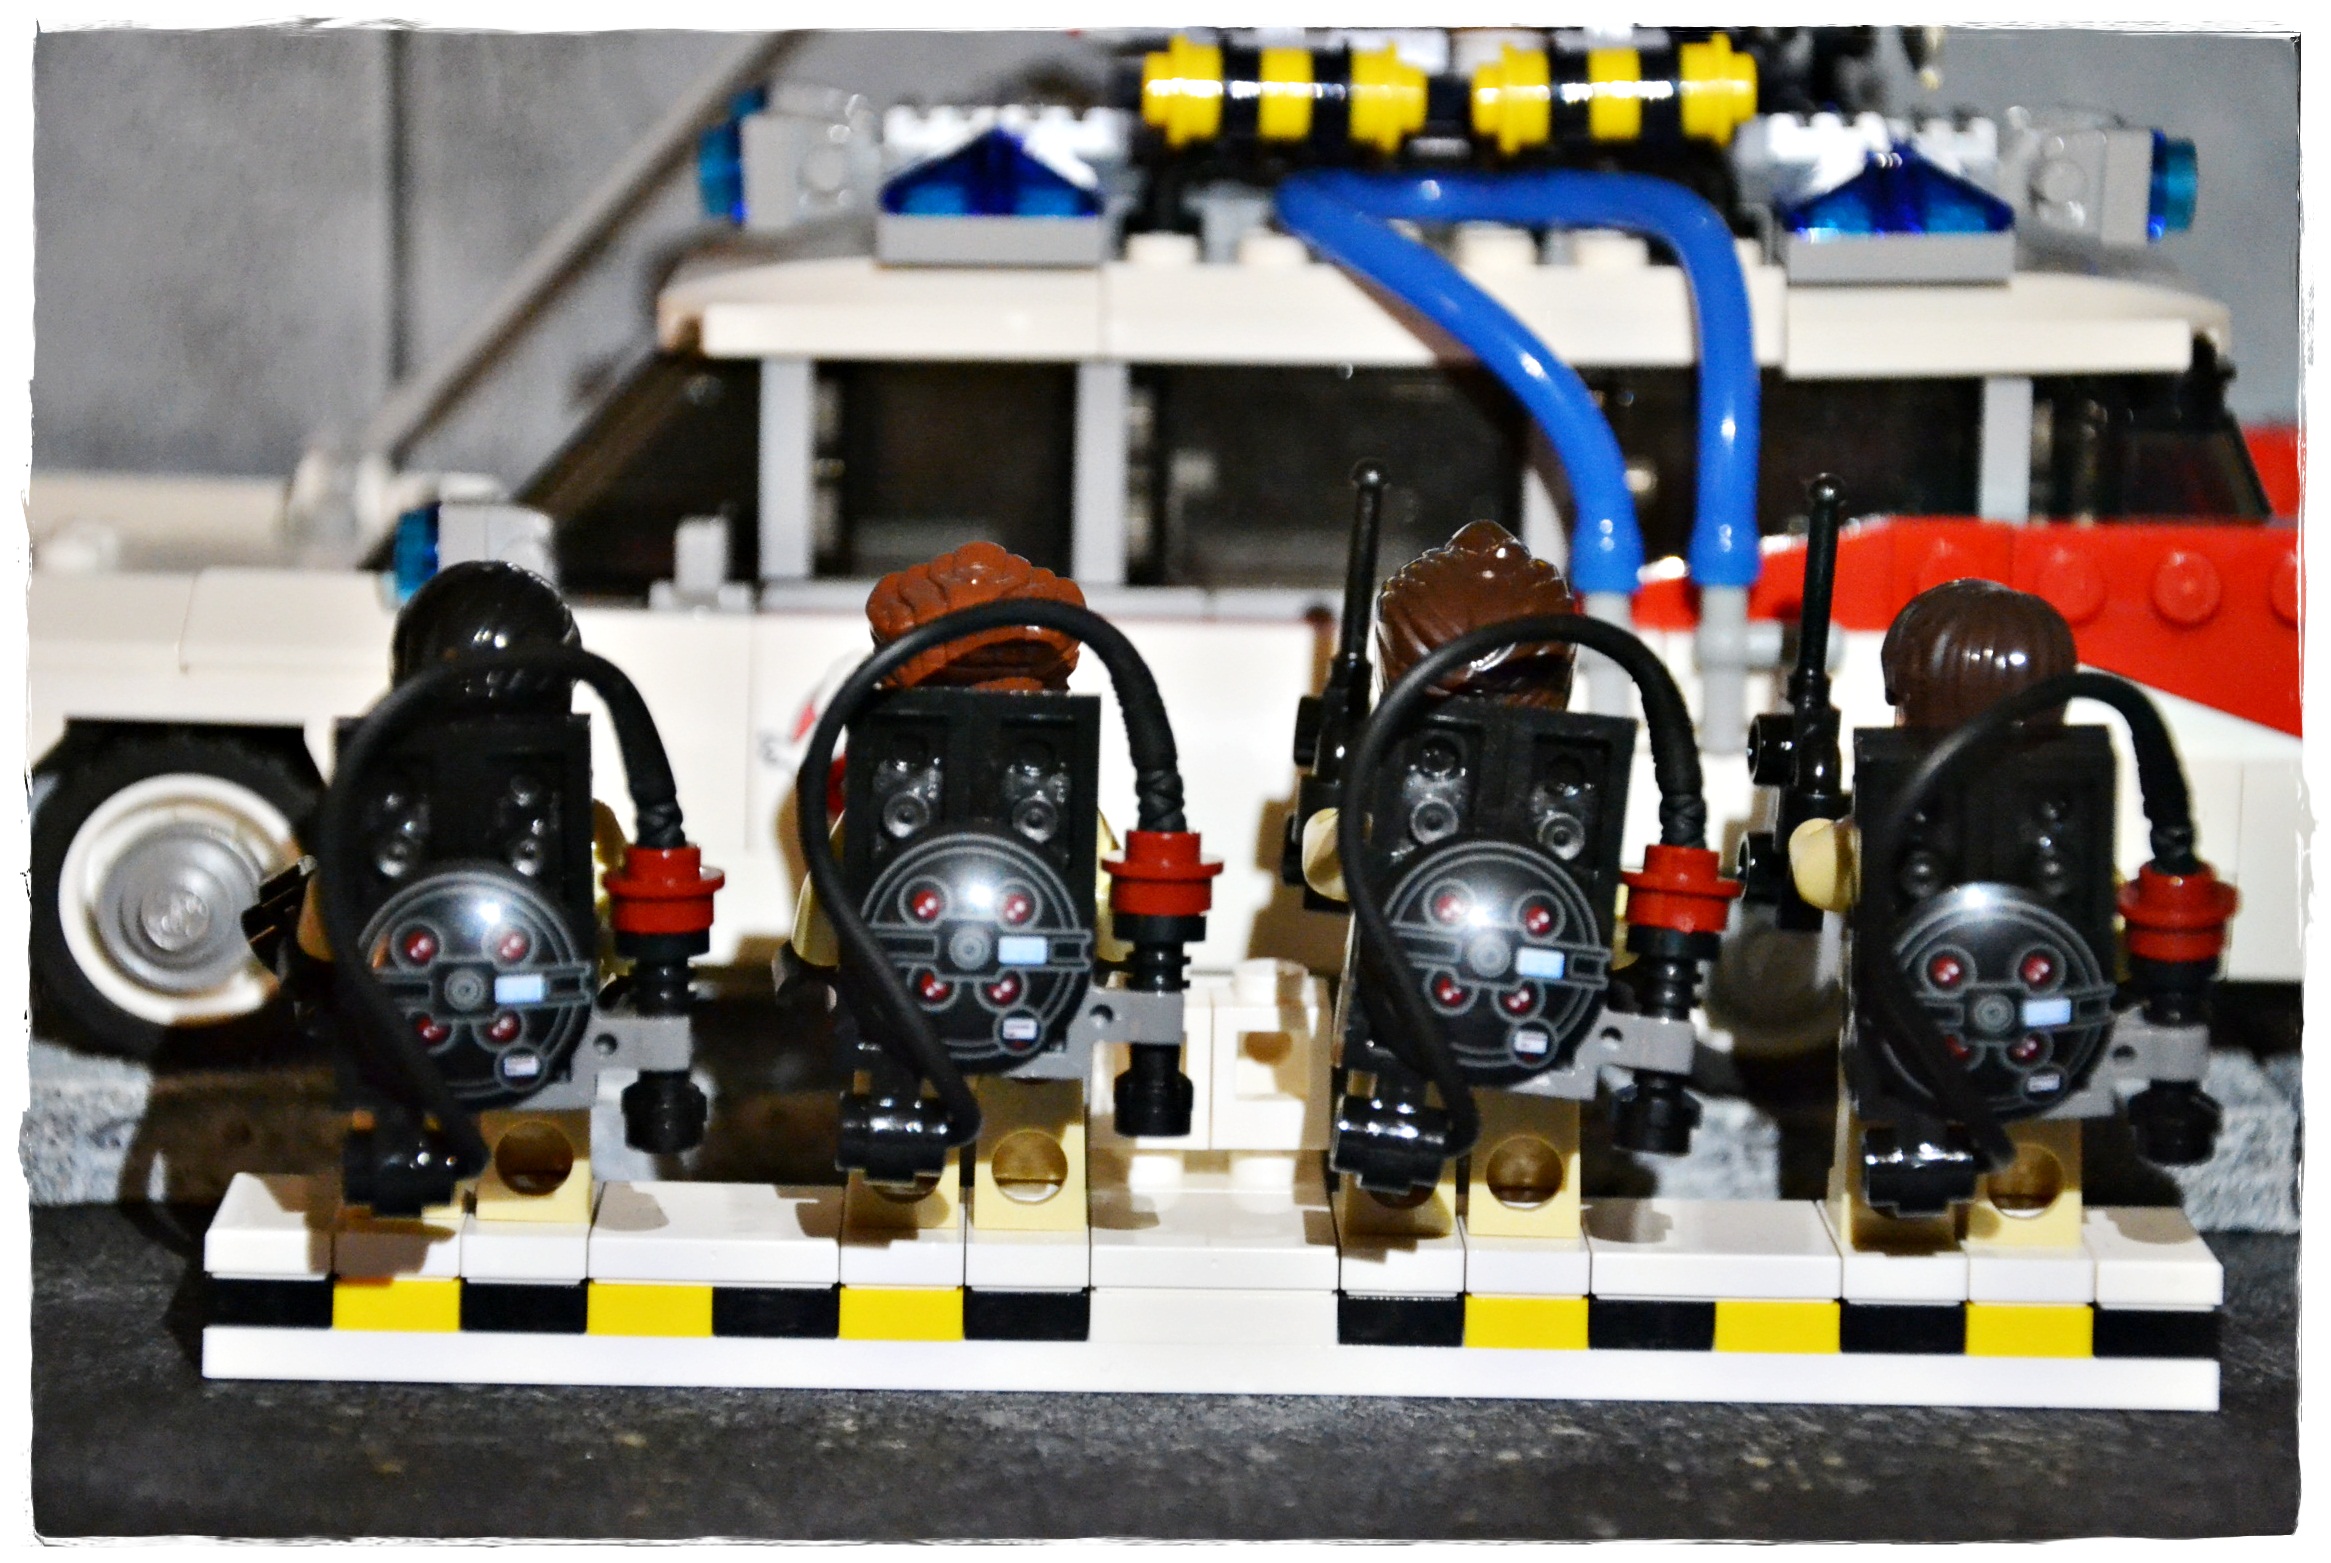 LEGO Ideas - Ghostbusters Ecto-1 set